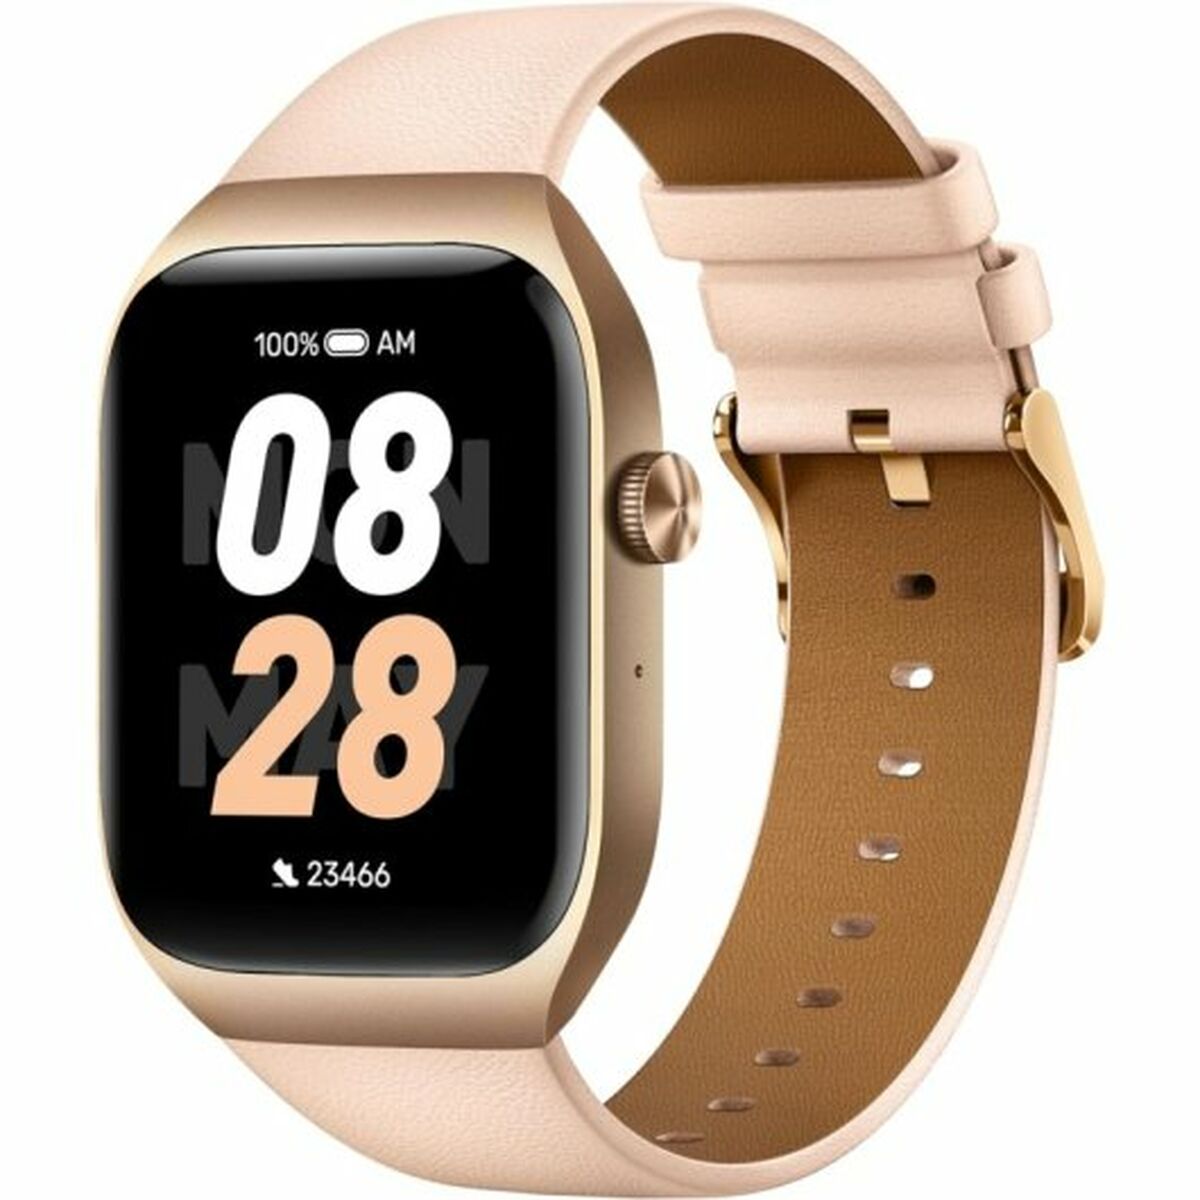 Kaufe Smartwatch Mibro T2 Gold bei AWK Flagship um € 88.00